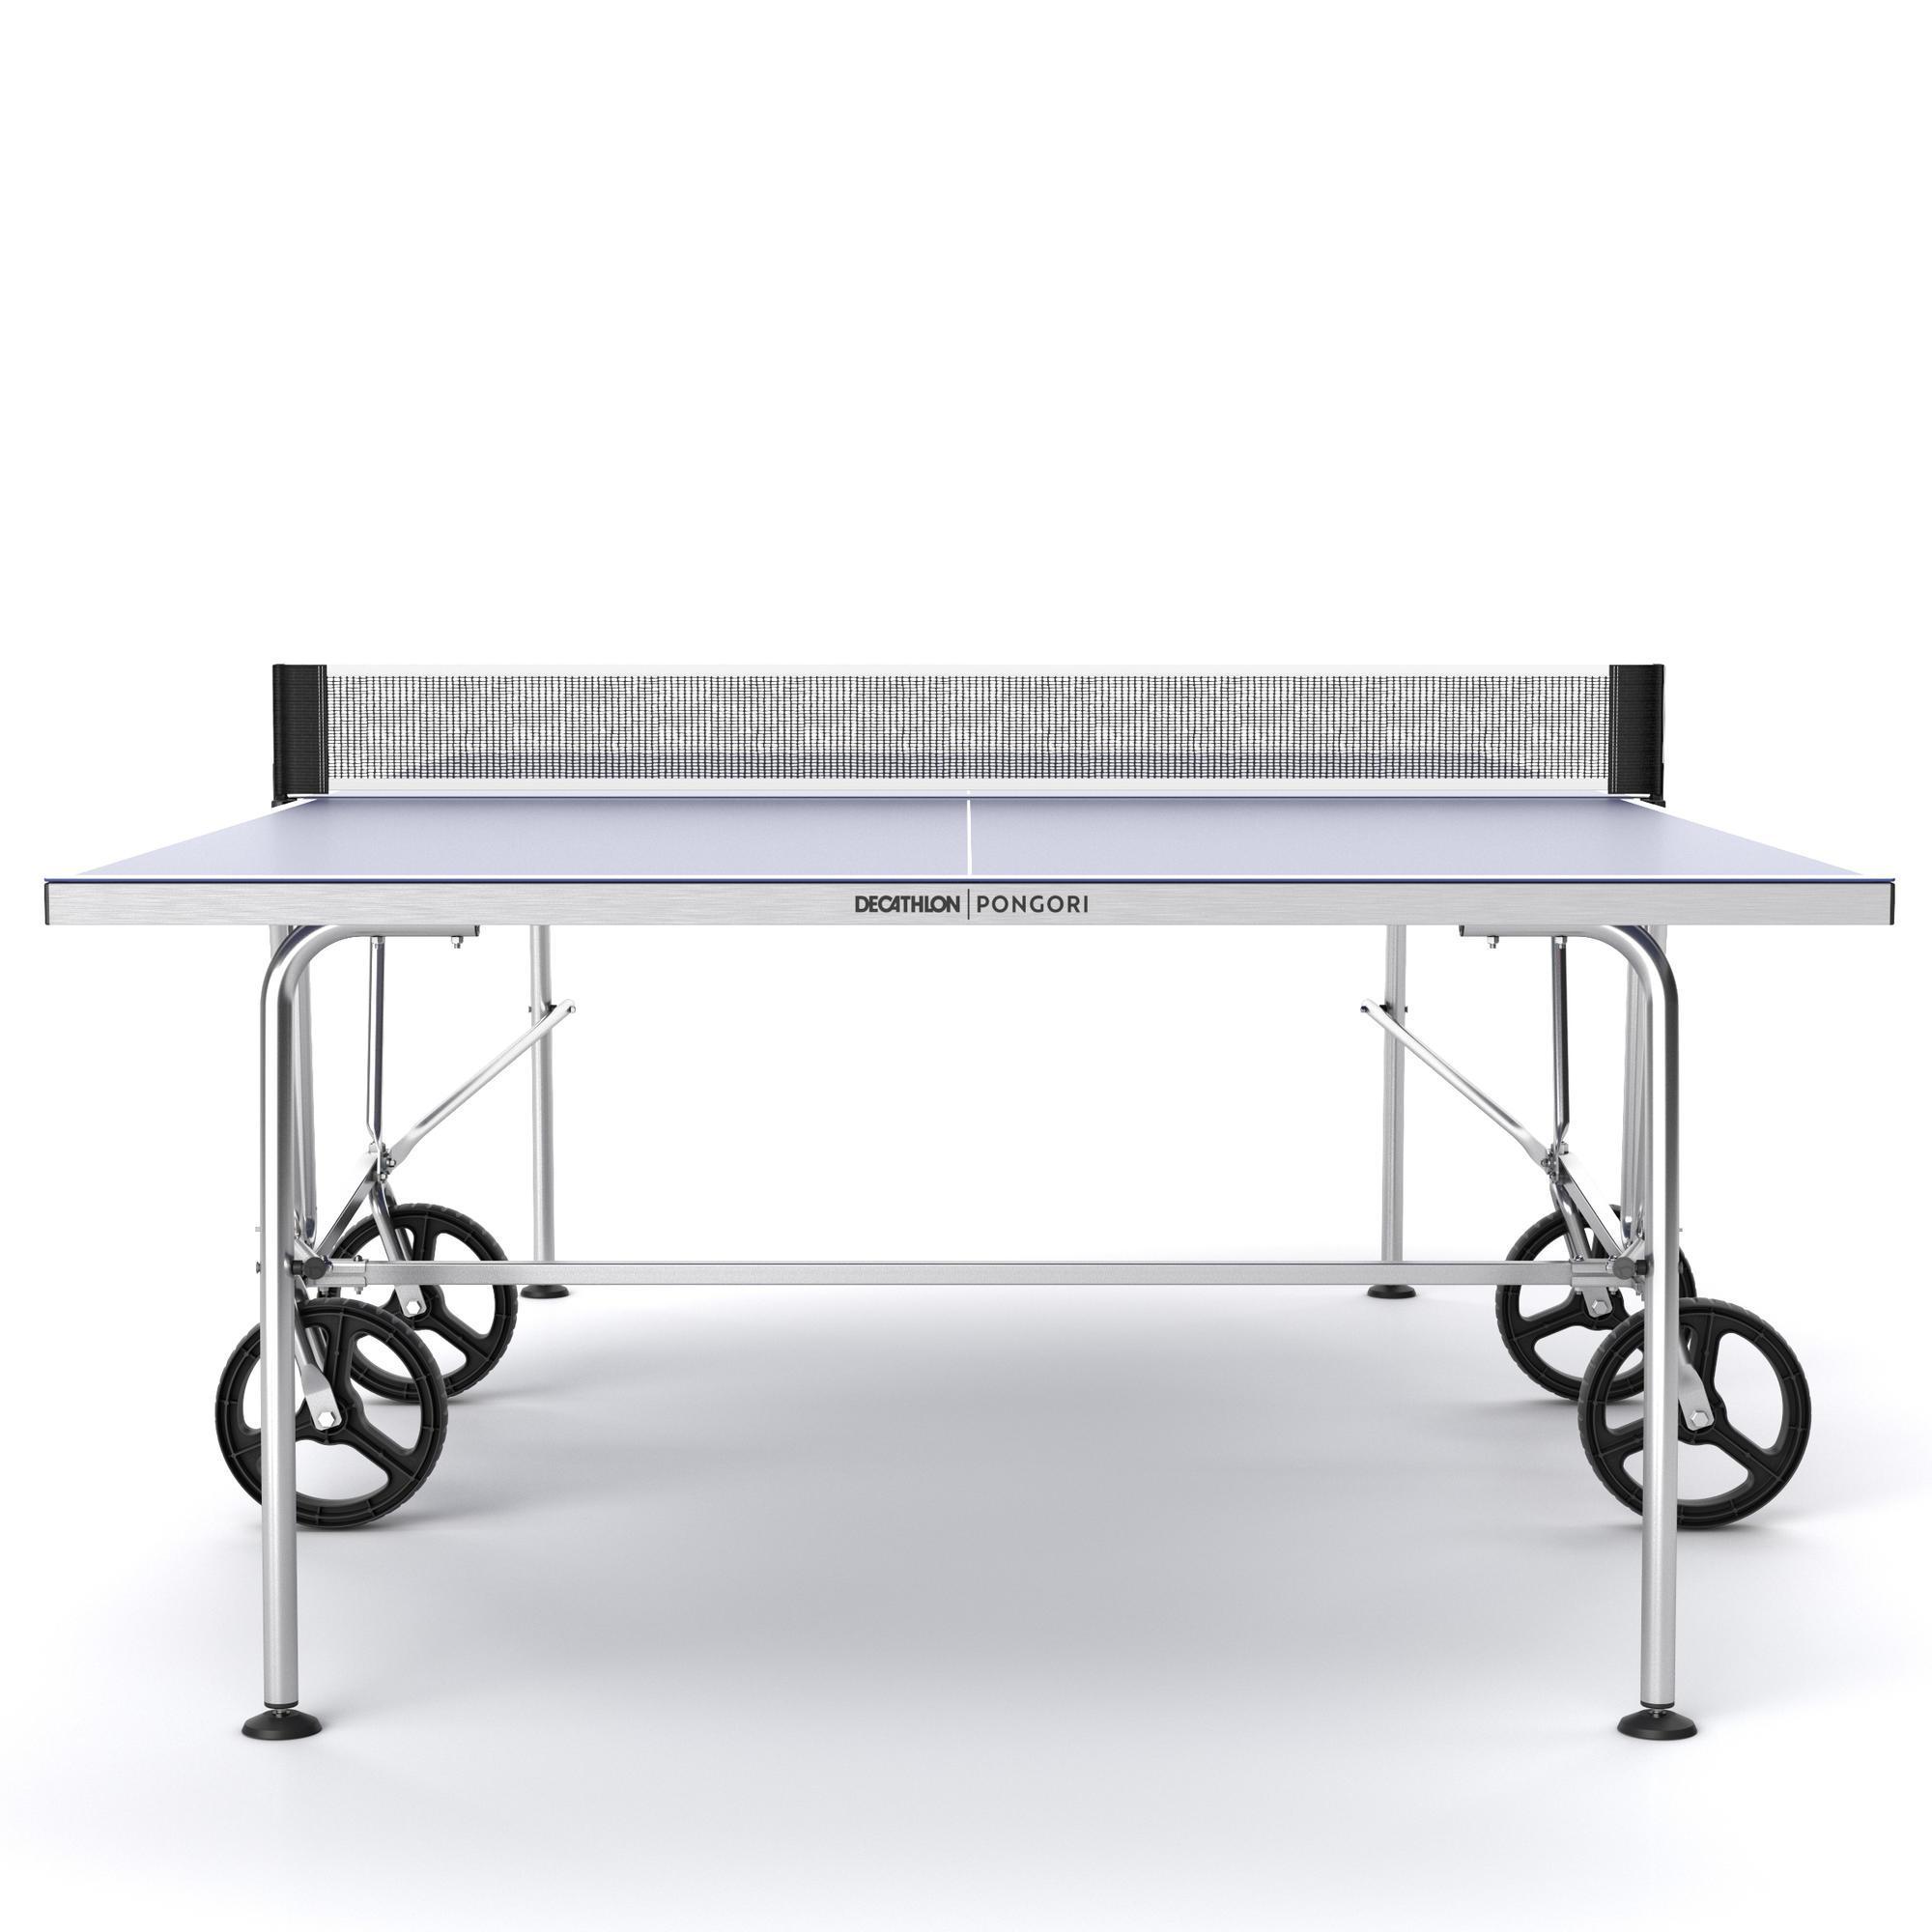 decathlon outdoor table tennis table